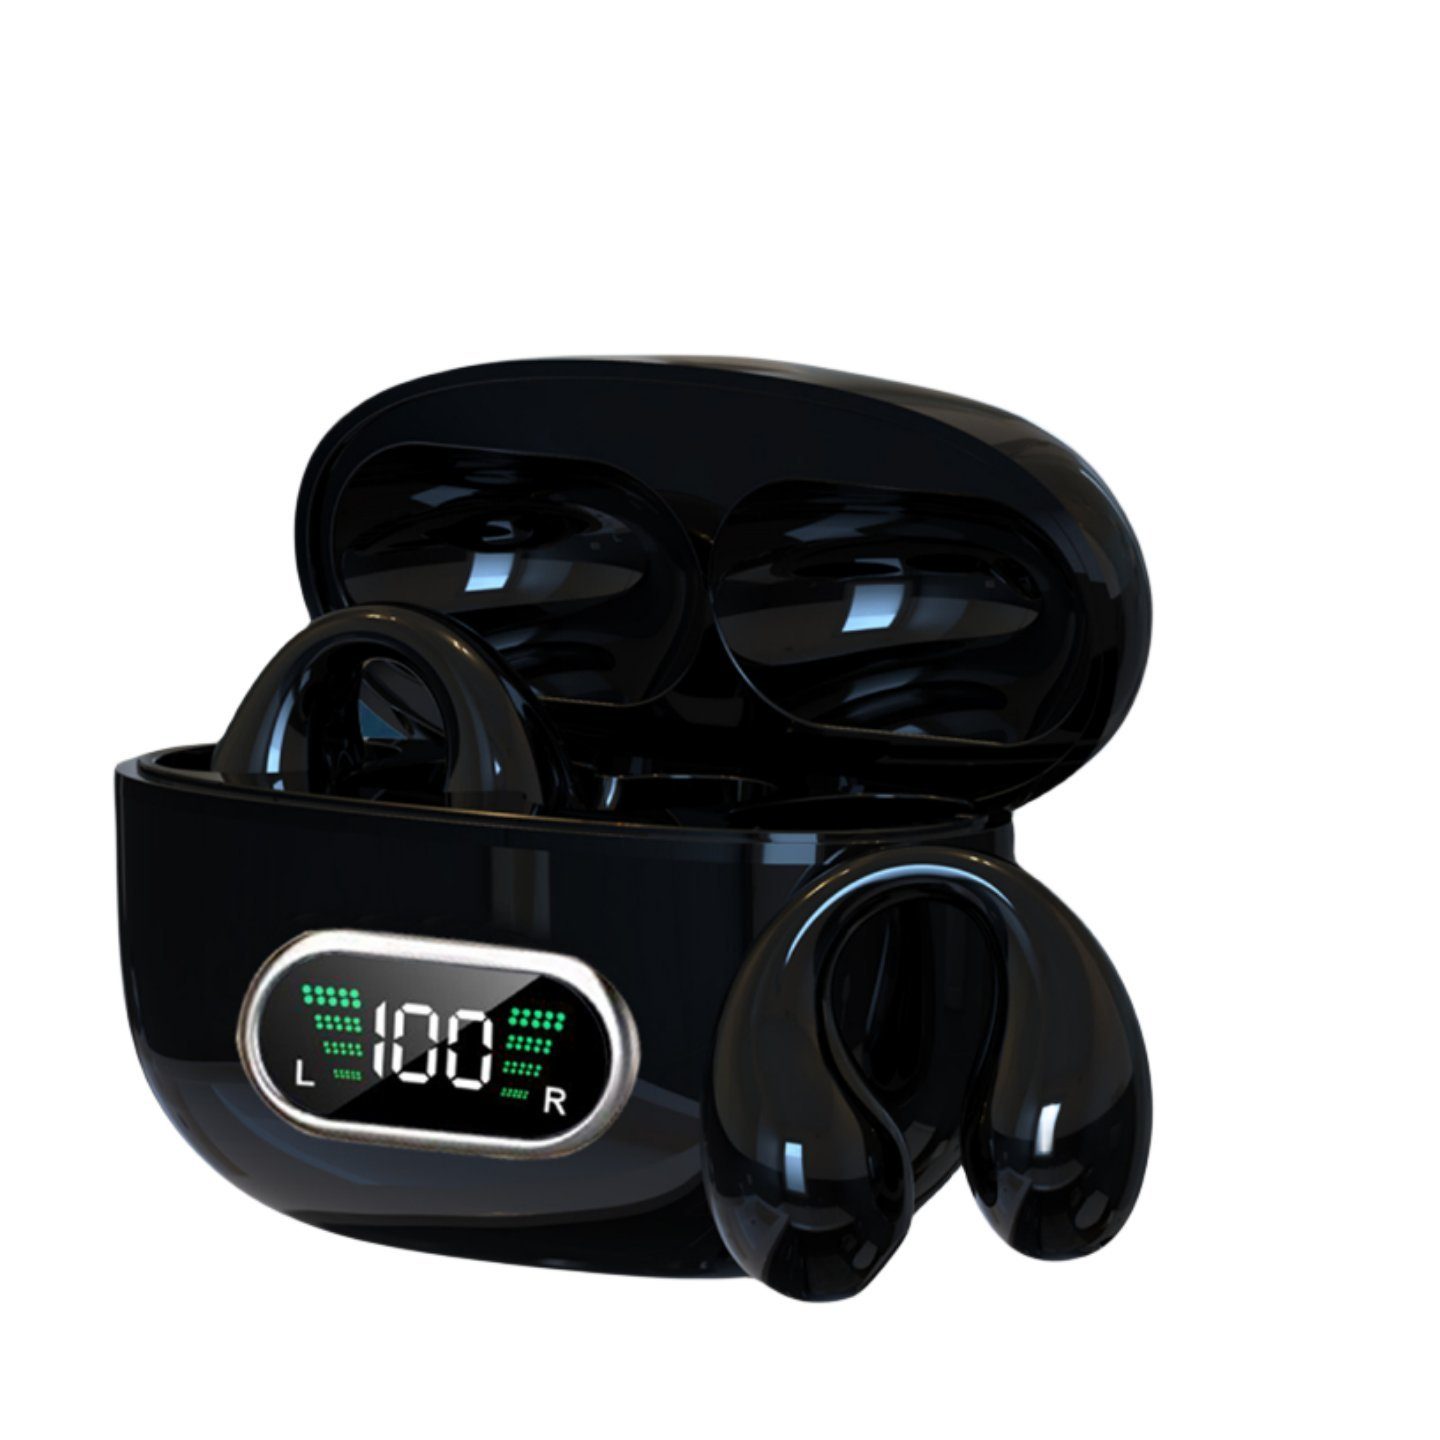 carefully selected Bluetooth-Headset-Ohrclip Kopfhörer des Digitaldisplay Schwarz Ohrclips) mit + (Bluetooth v5.3 Tragen schmerzloses Rauschunterdrückungsfunktion intelligentes 